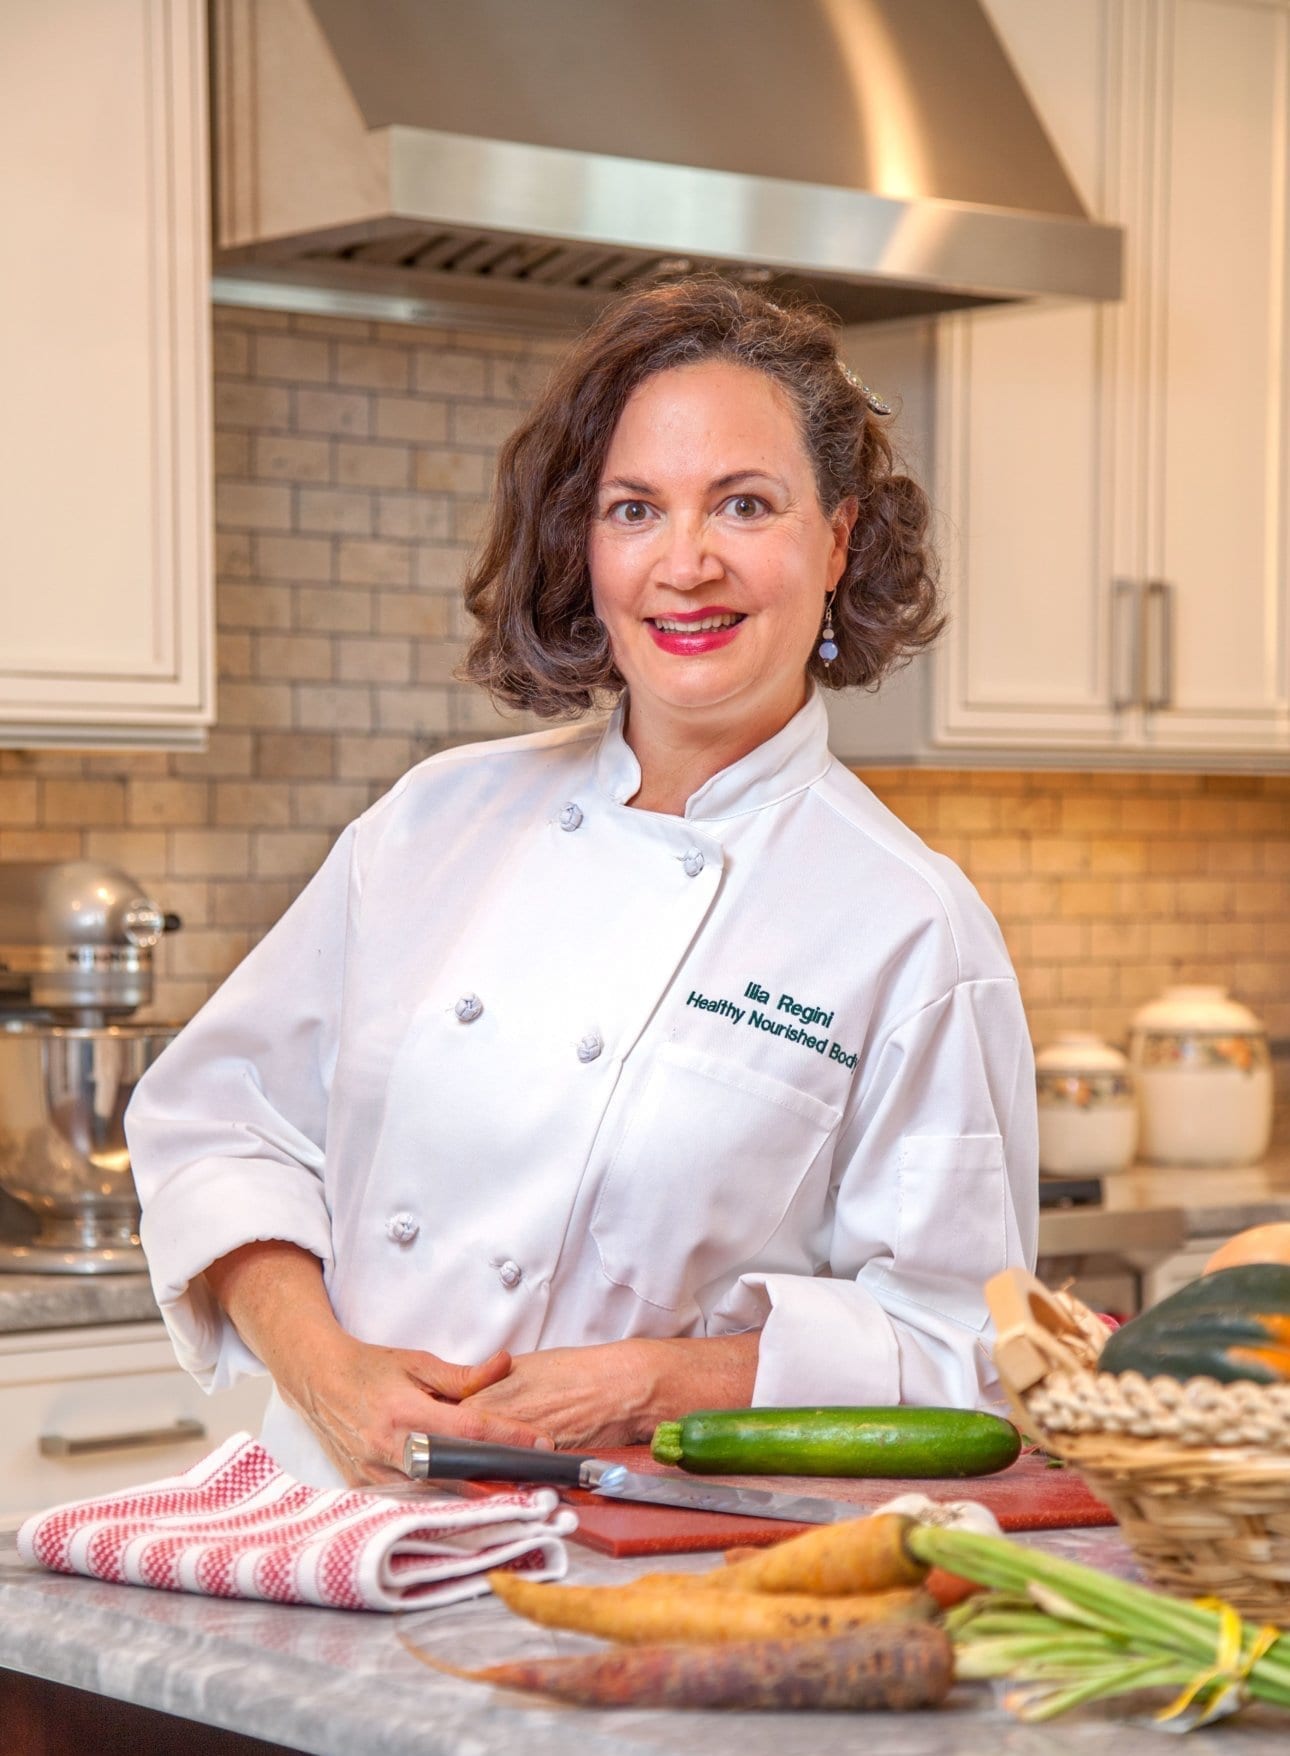 https://healthynourishedbody.com/media/2016/04/Ilia-in-Chef-Attire-on-counter-min-1.jpg